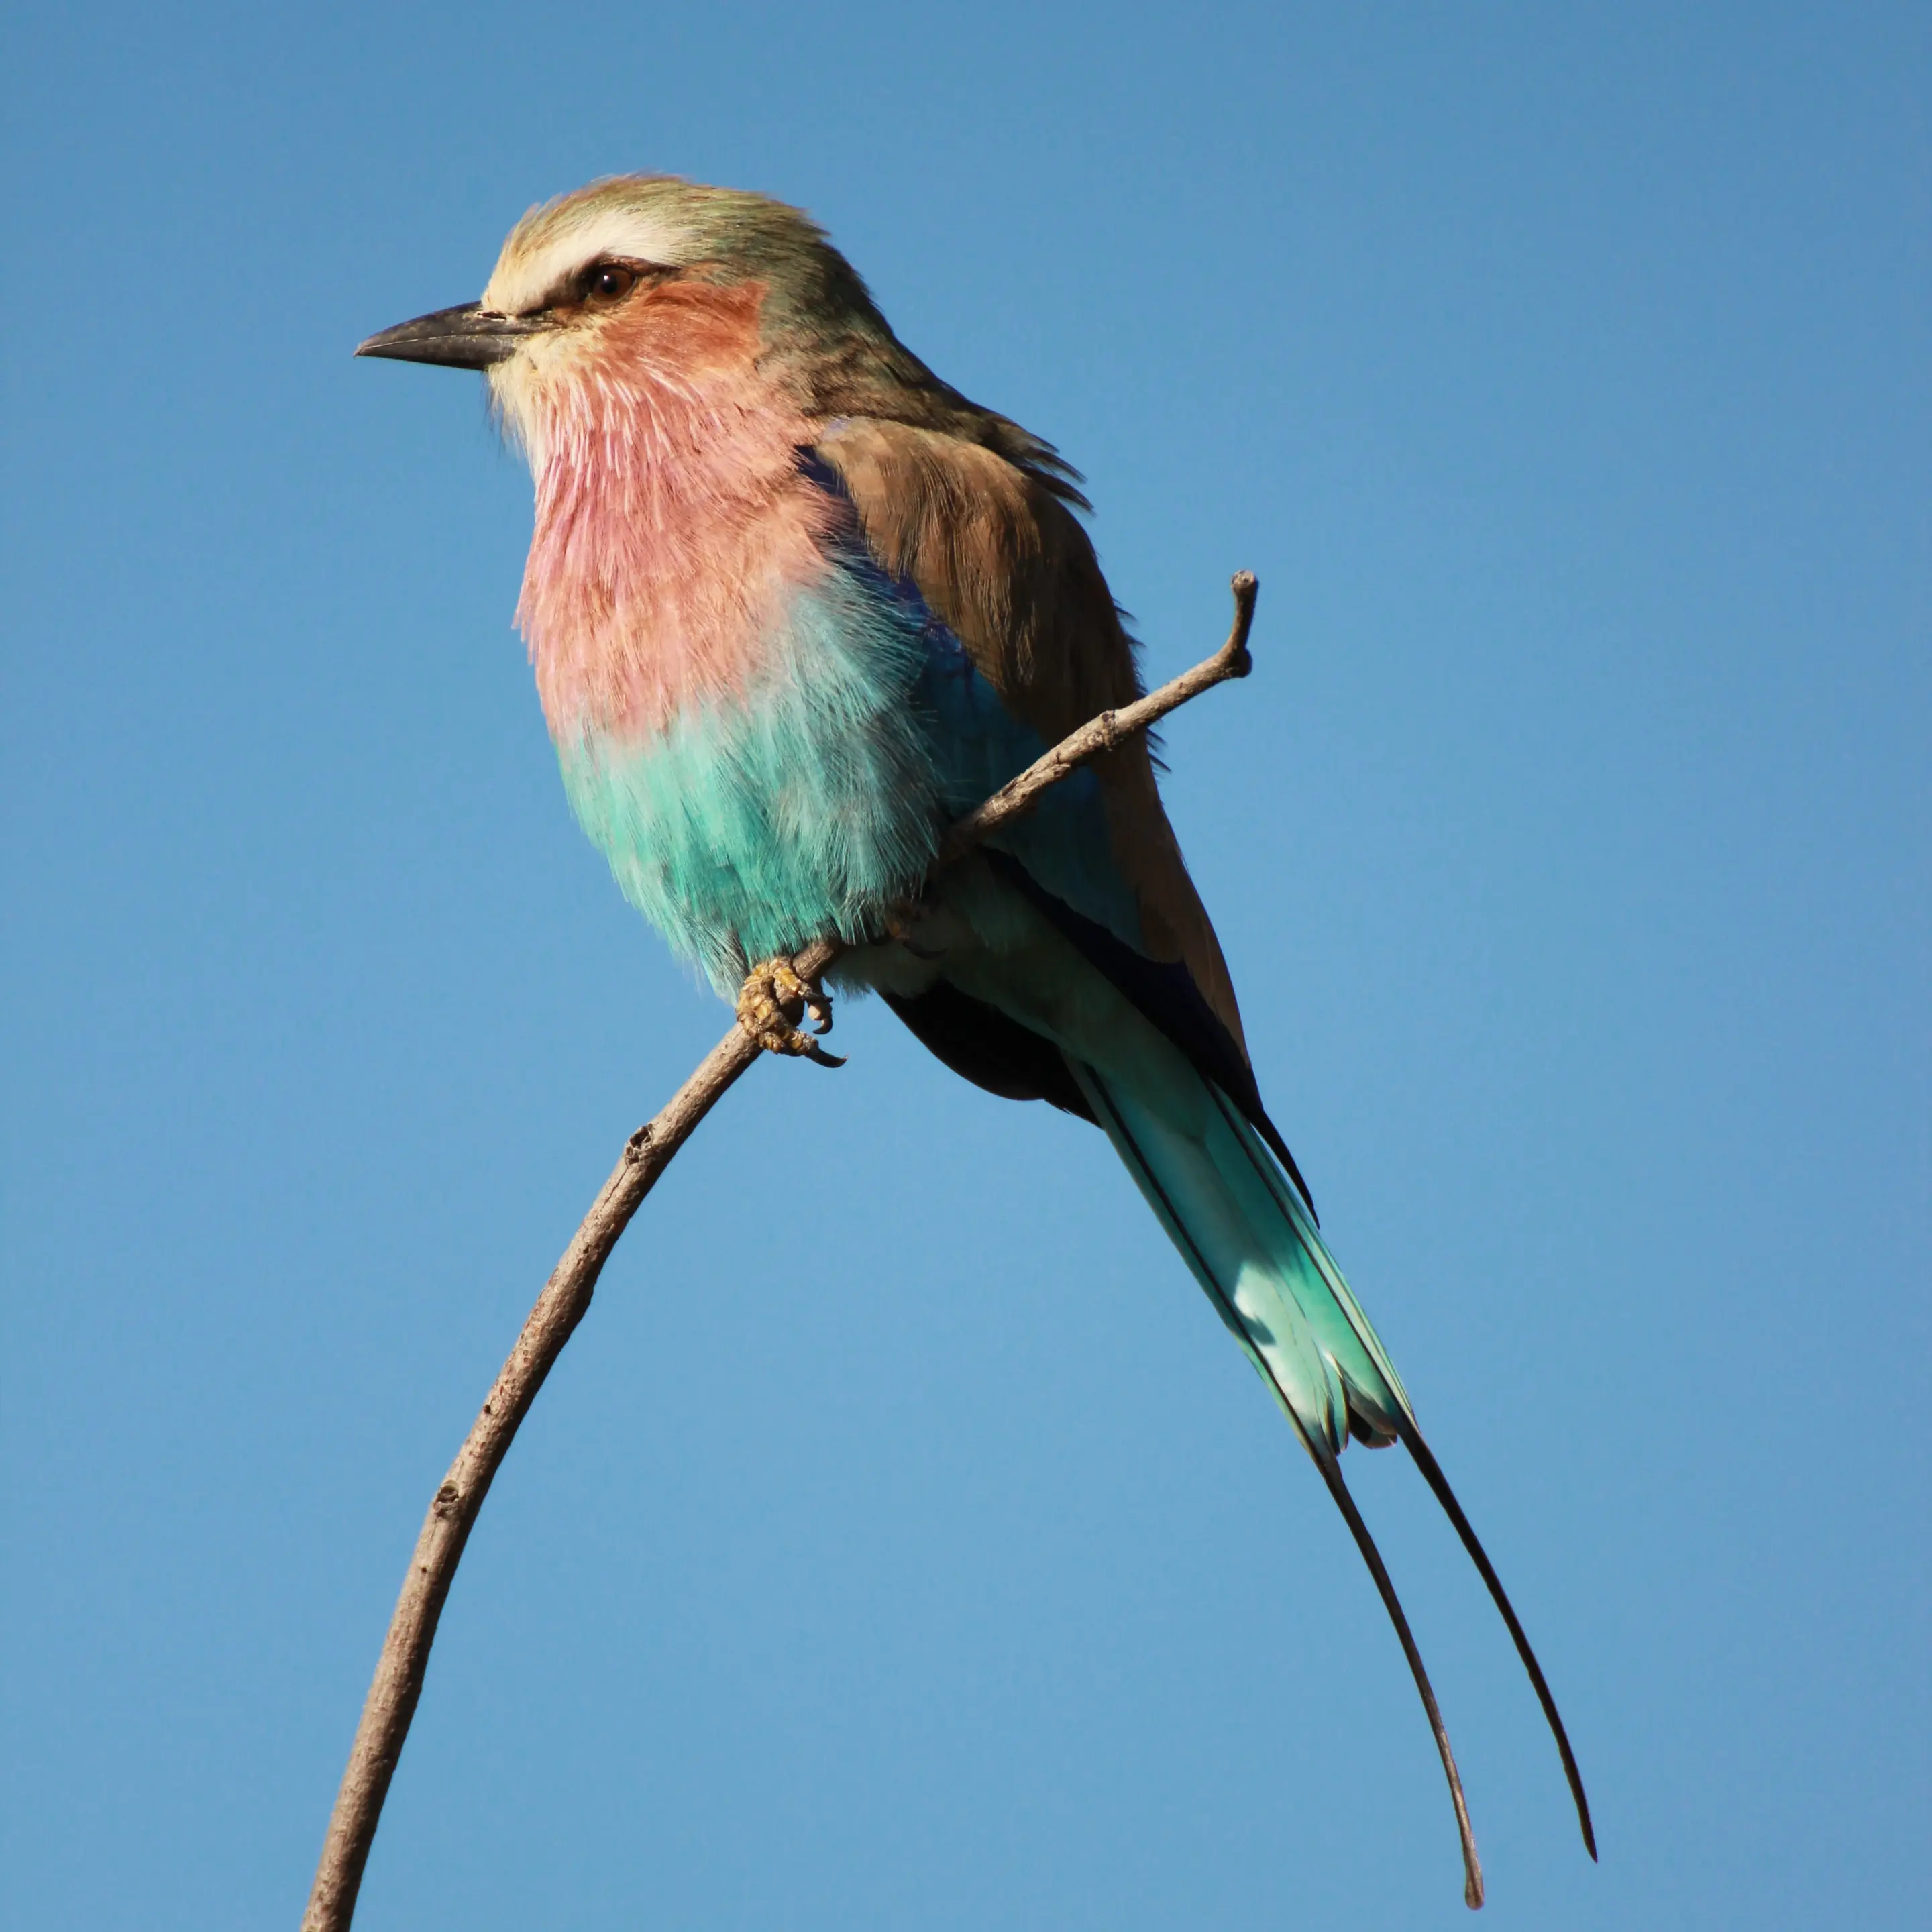 Multicolored bird on a twig